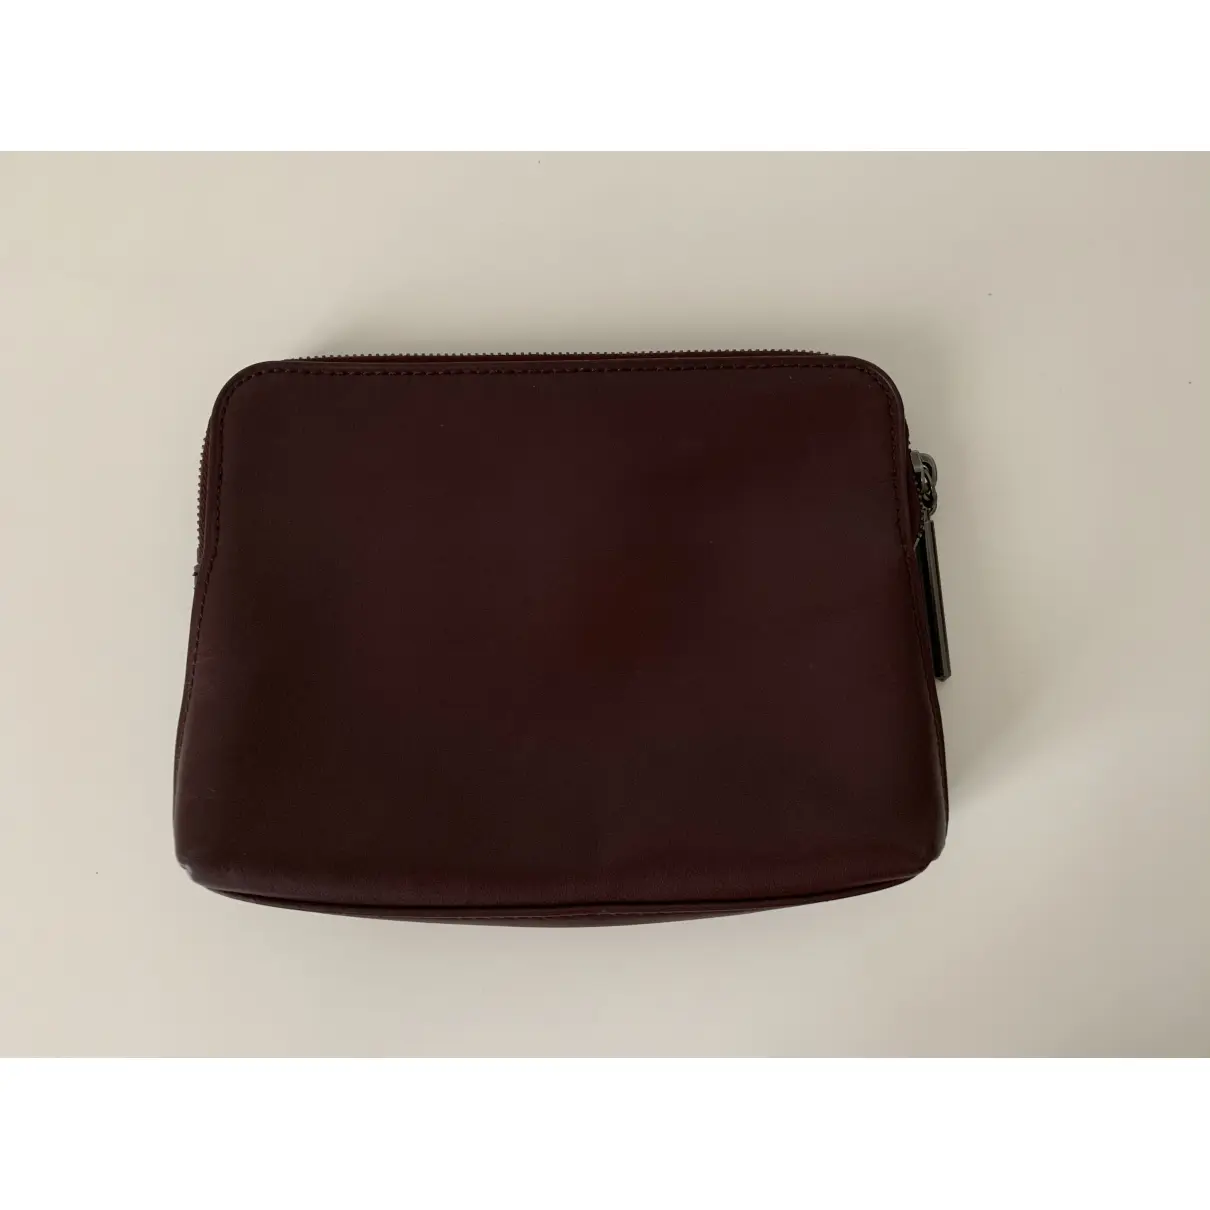 Buy 3.1 Phillip Lim Leather clutch bag online